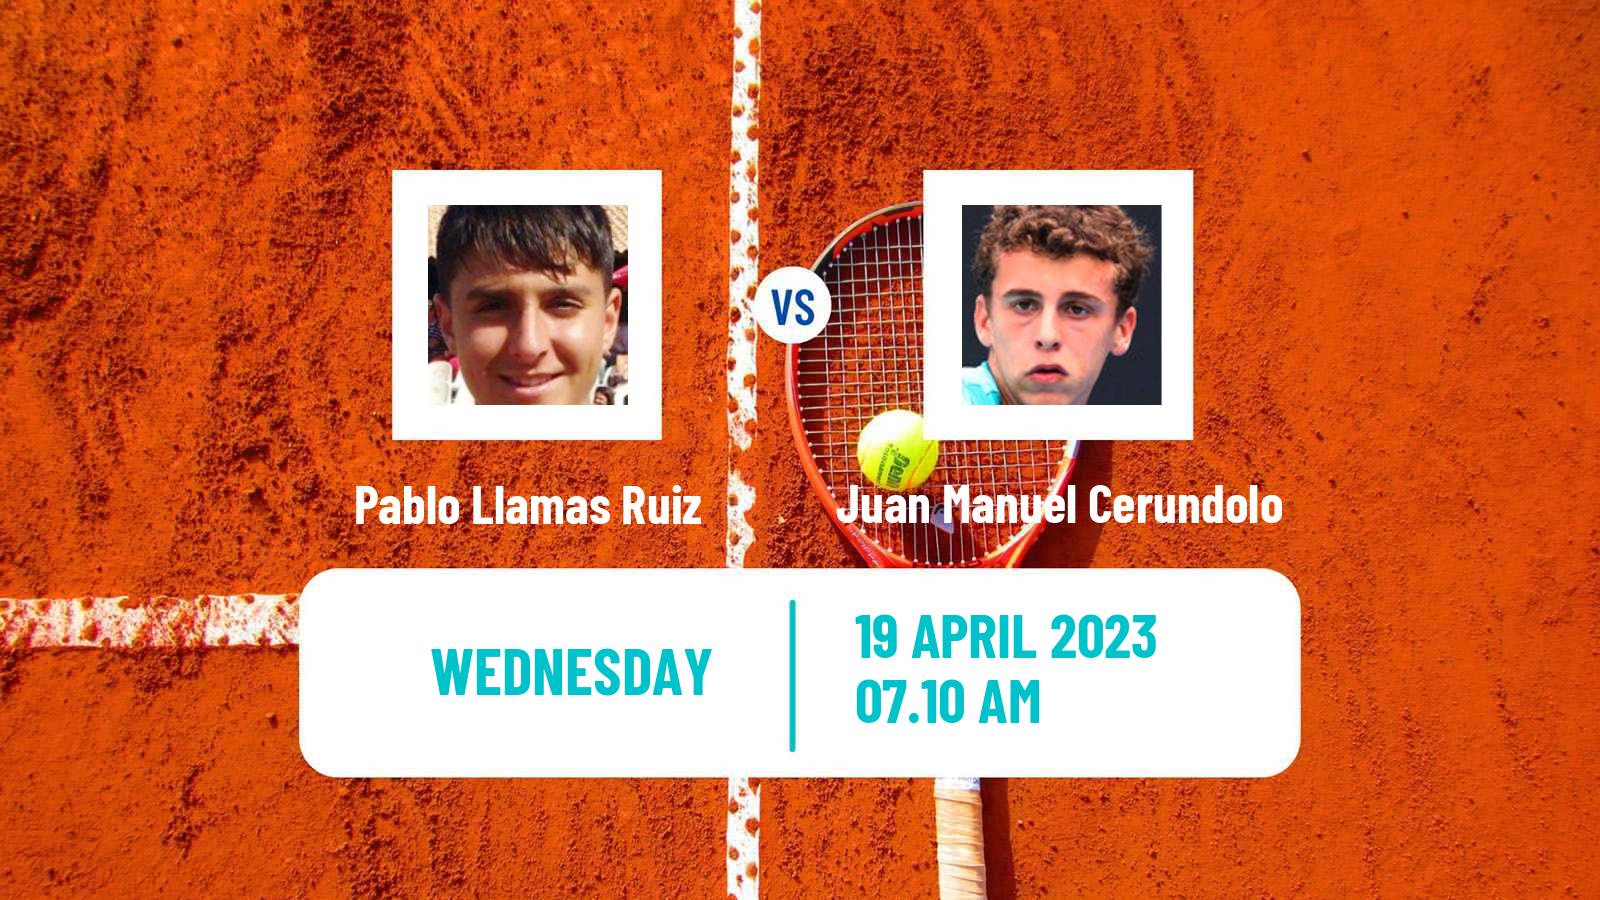 Tennis ATP Challenger Pablo Llamas Ruiz - Juan Manuel Cerundolo